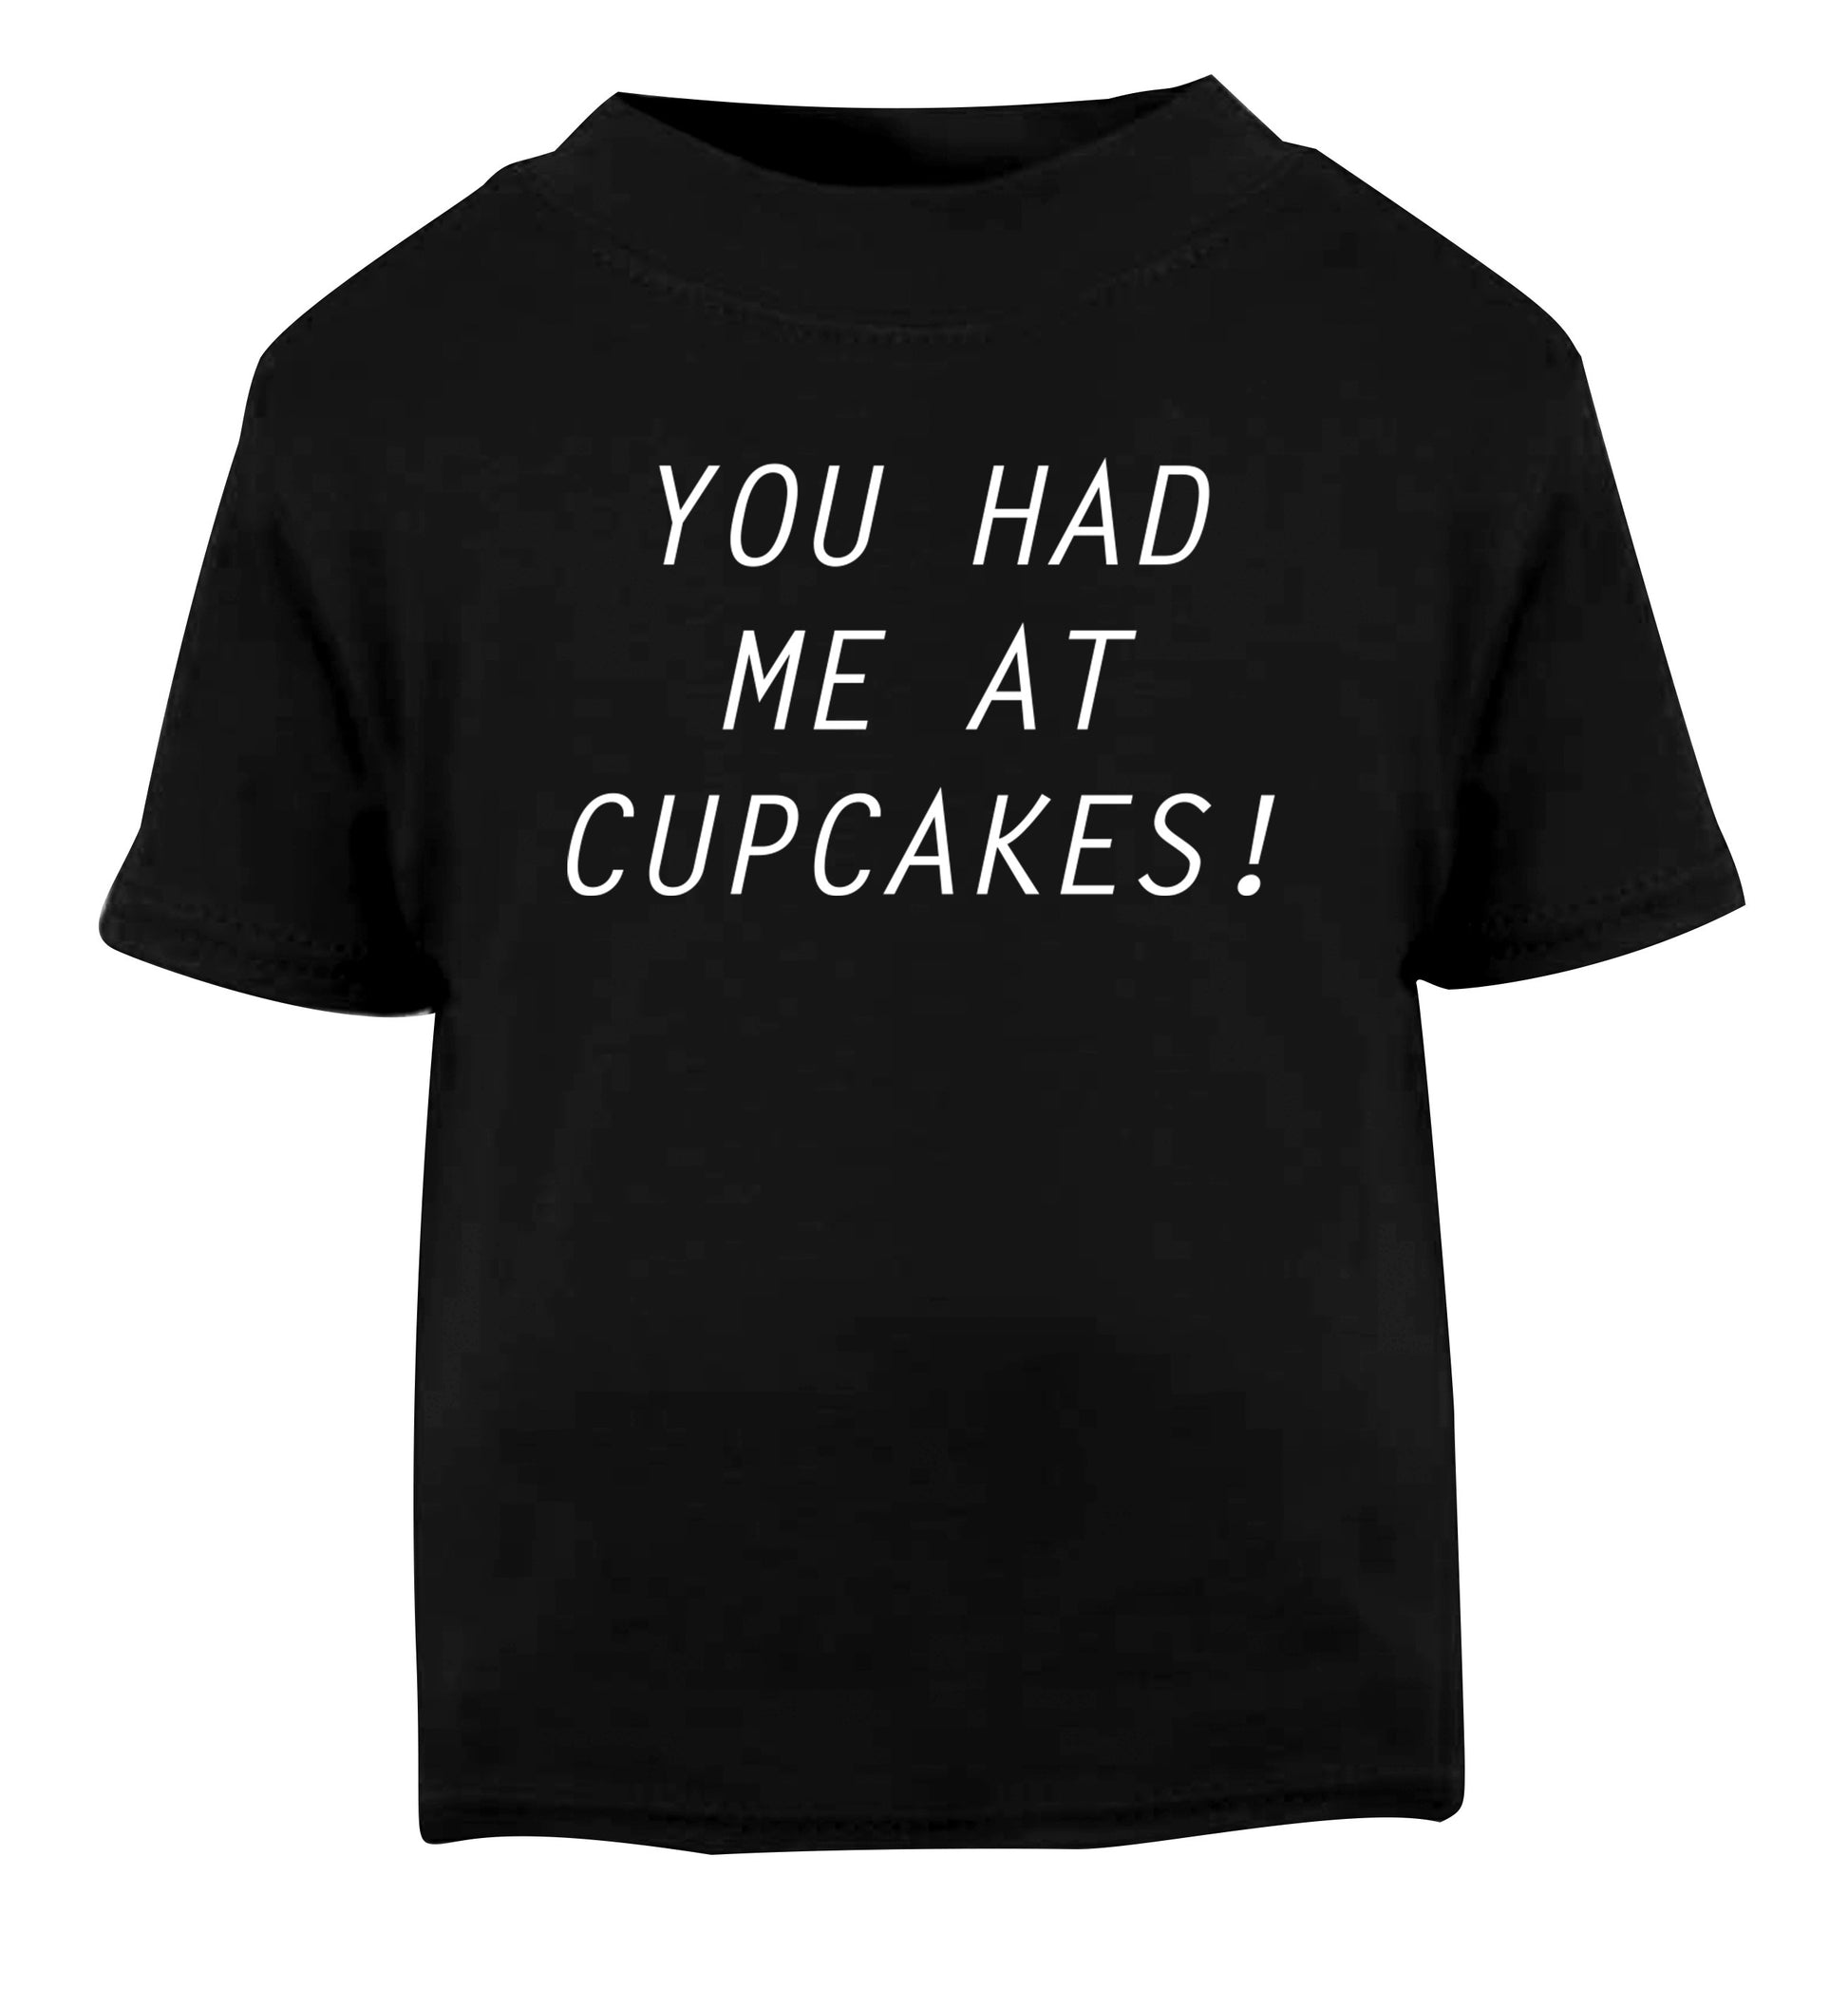 You had me at cupcakes Black Baby Toddler Tshirt 2 years